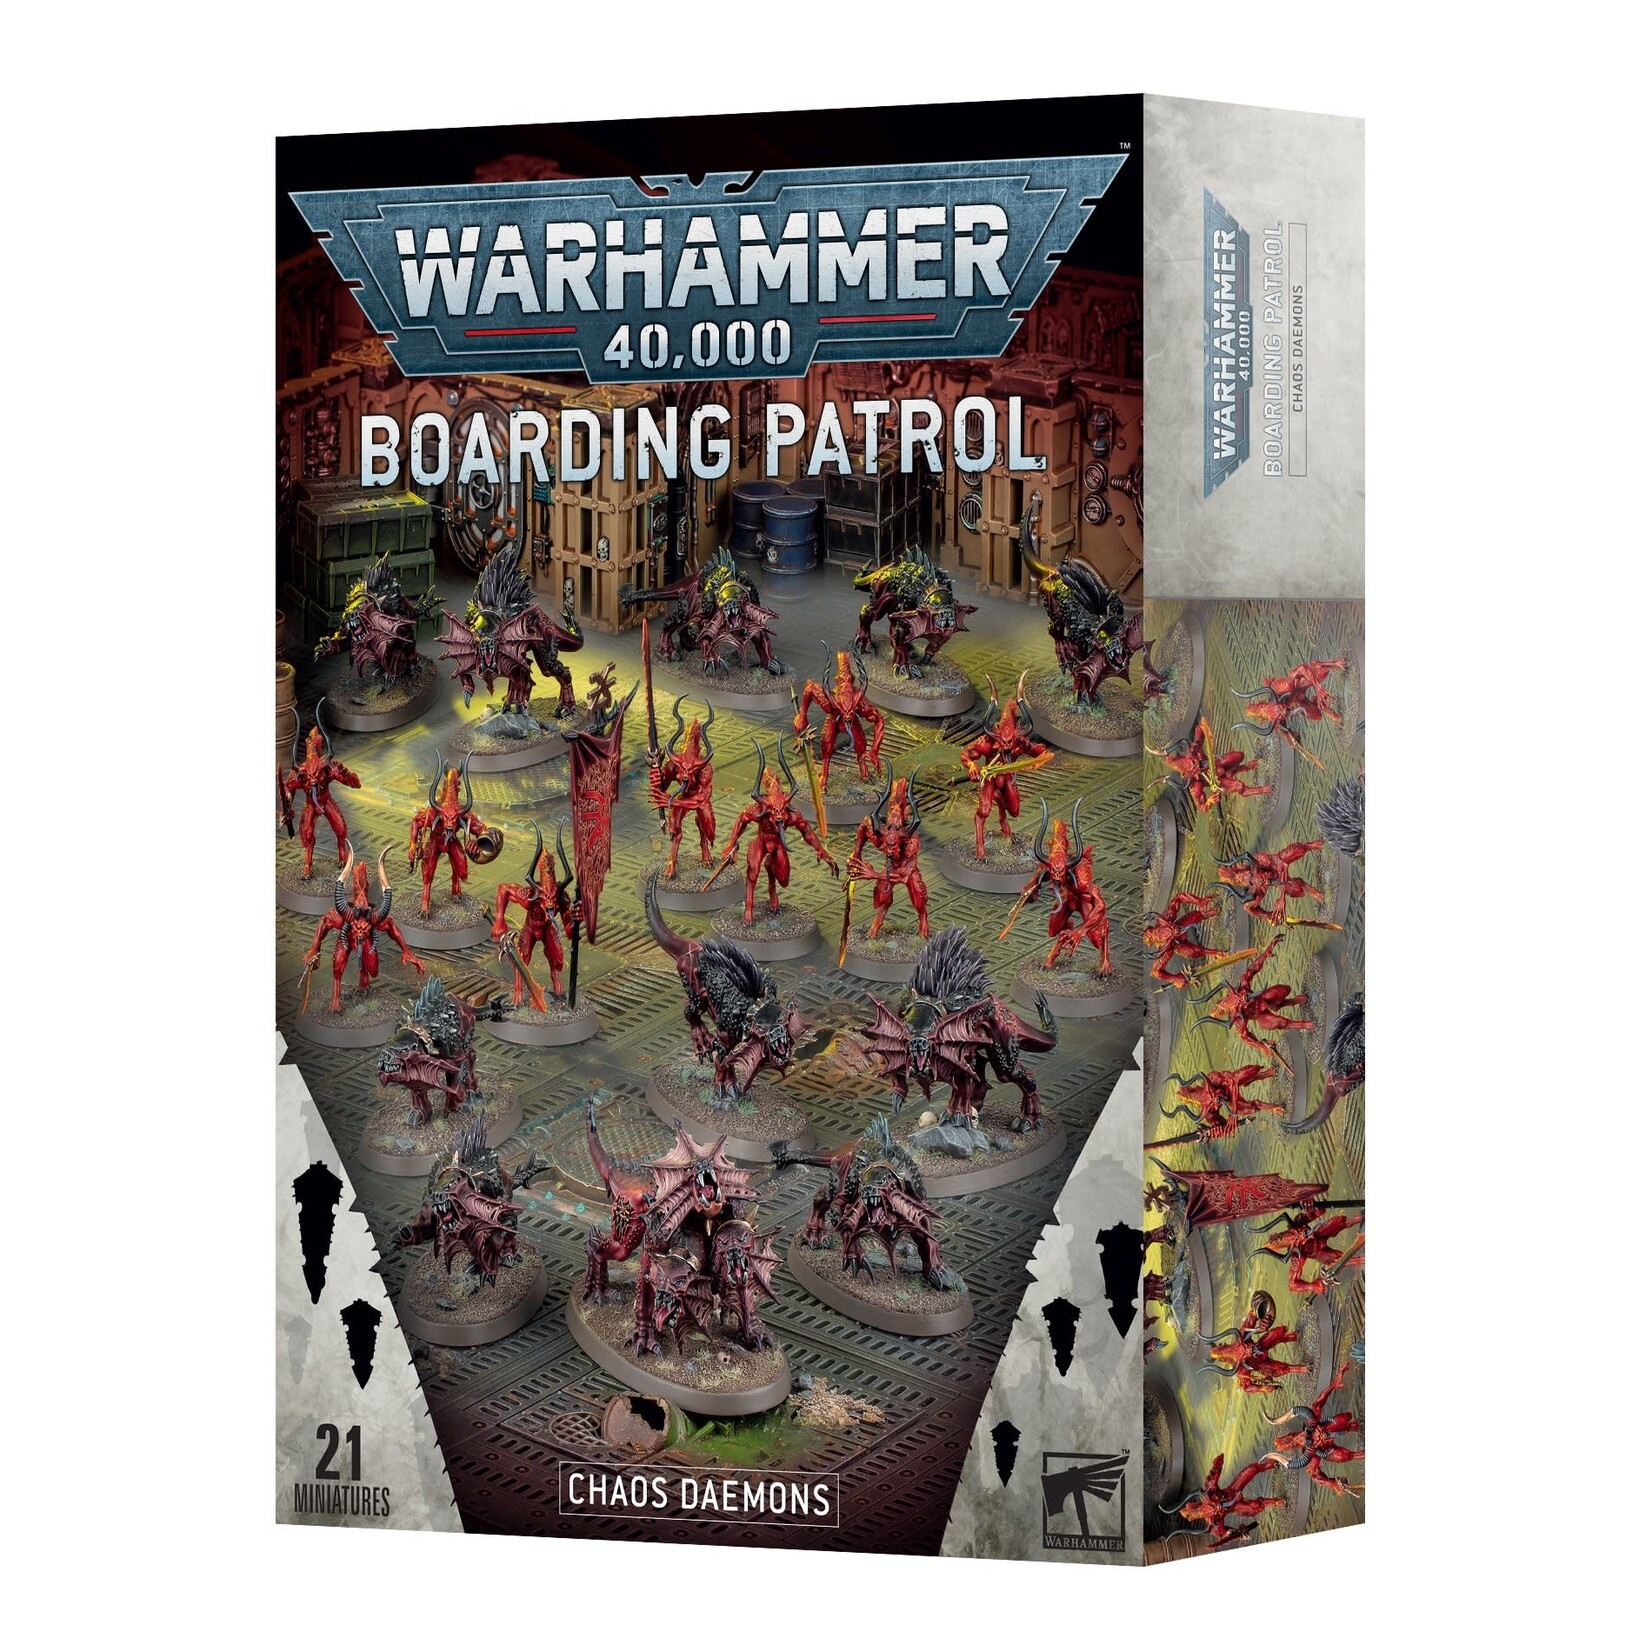 Warhammer 40k Warhammer 40k: Chaos Daemons: Boarding Patrol